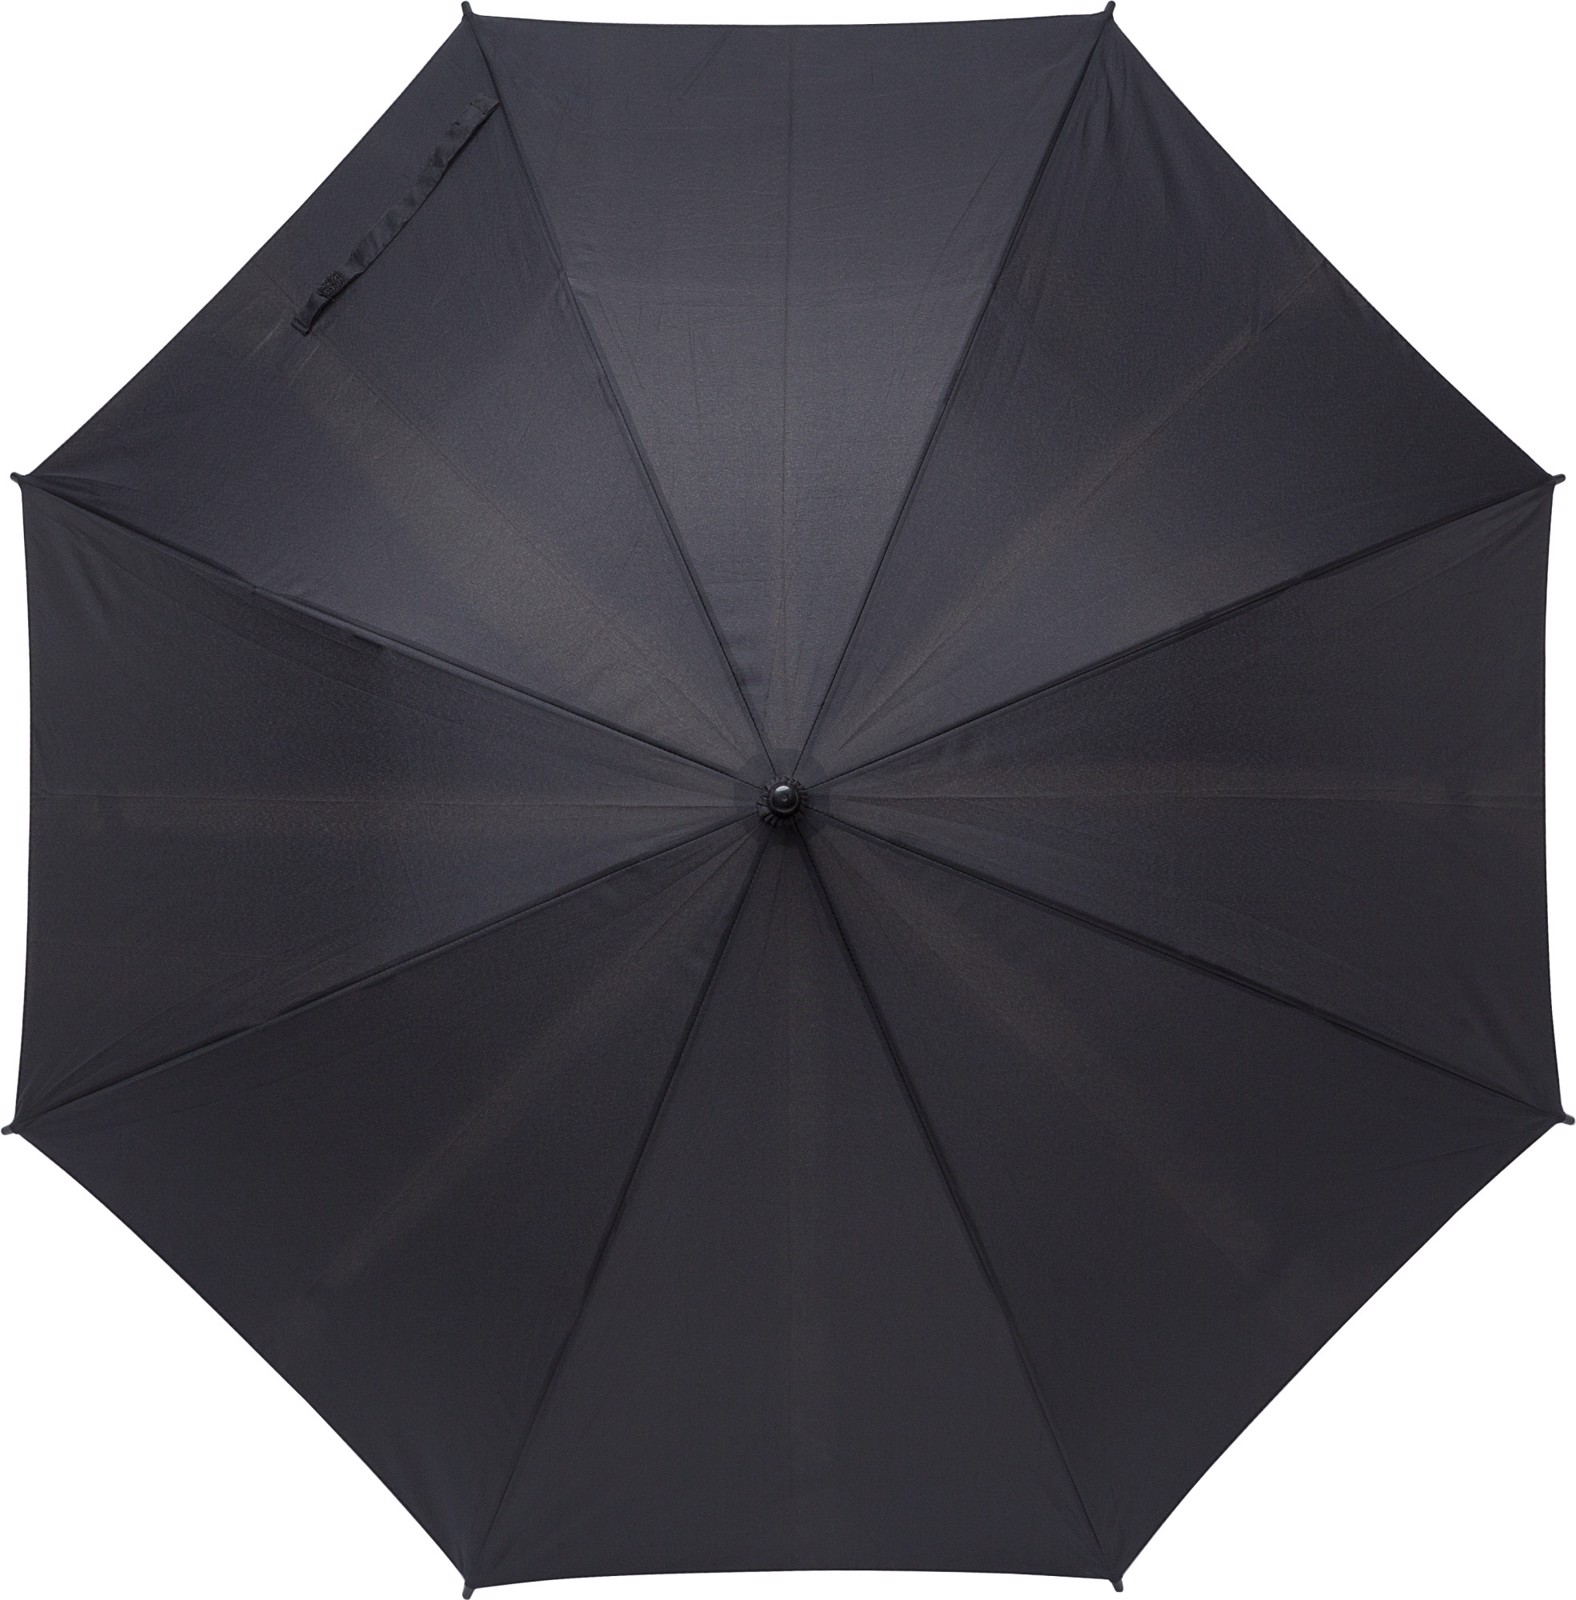 RPET pongee (190T) umbrella - Black